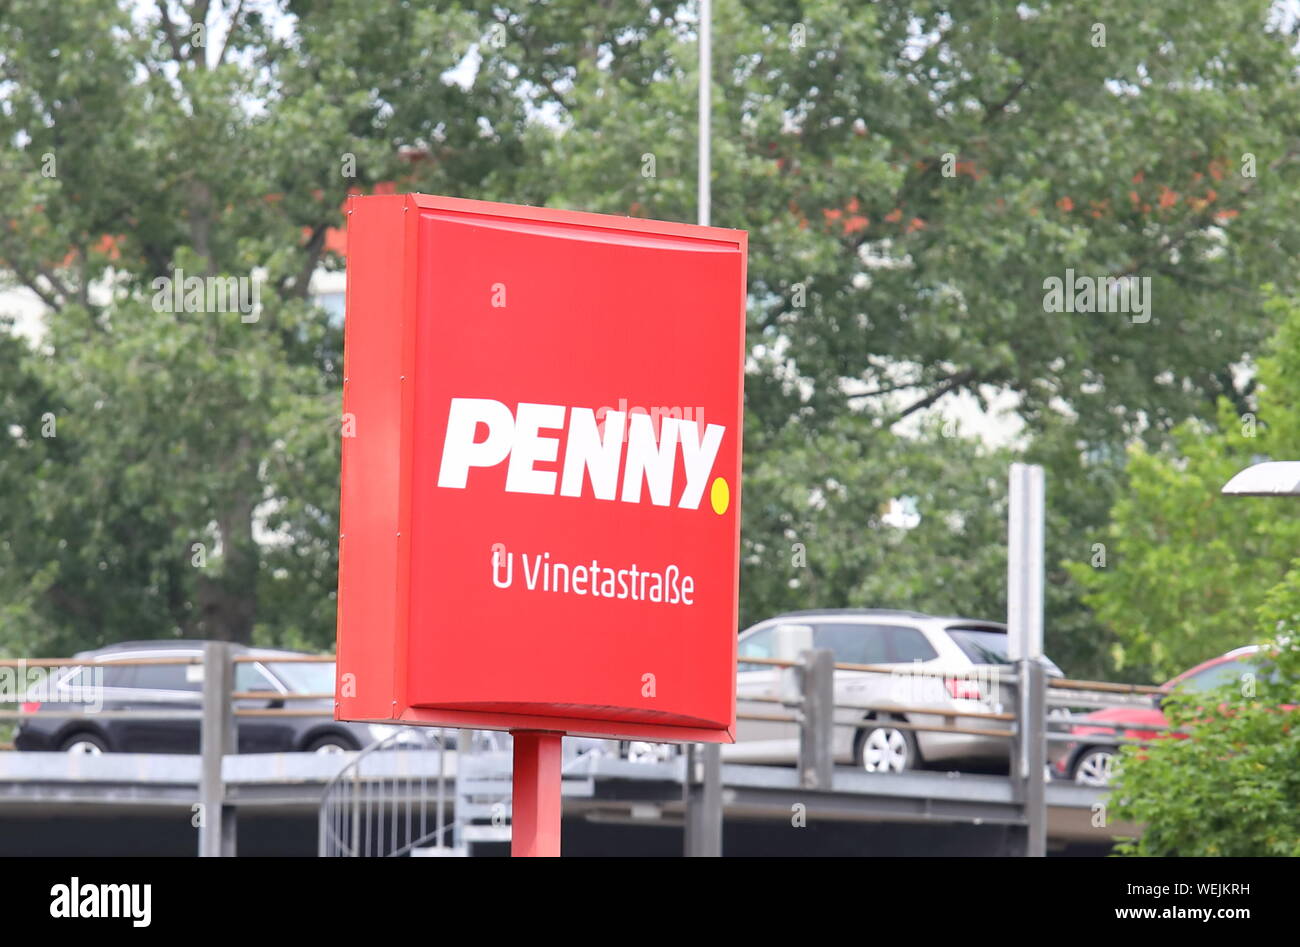 Penny discount supermarket Germany Stock Photo - Alamy